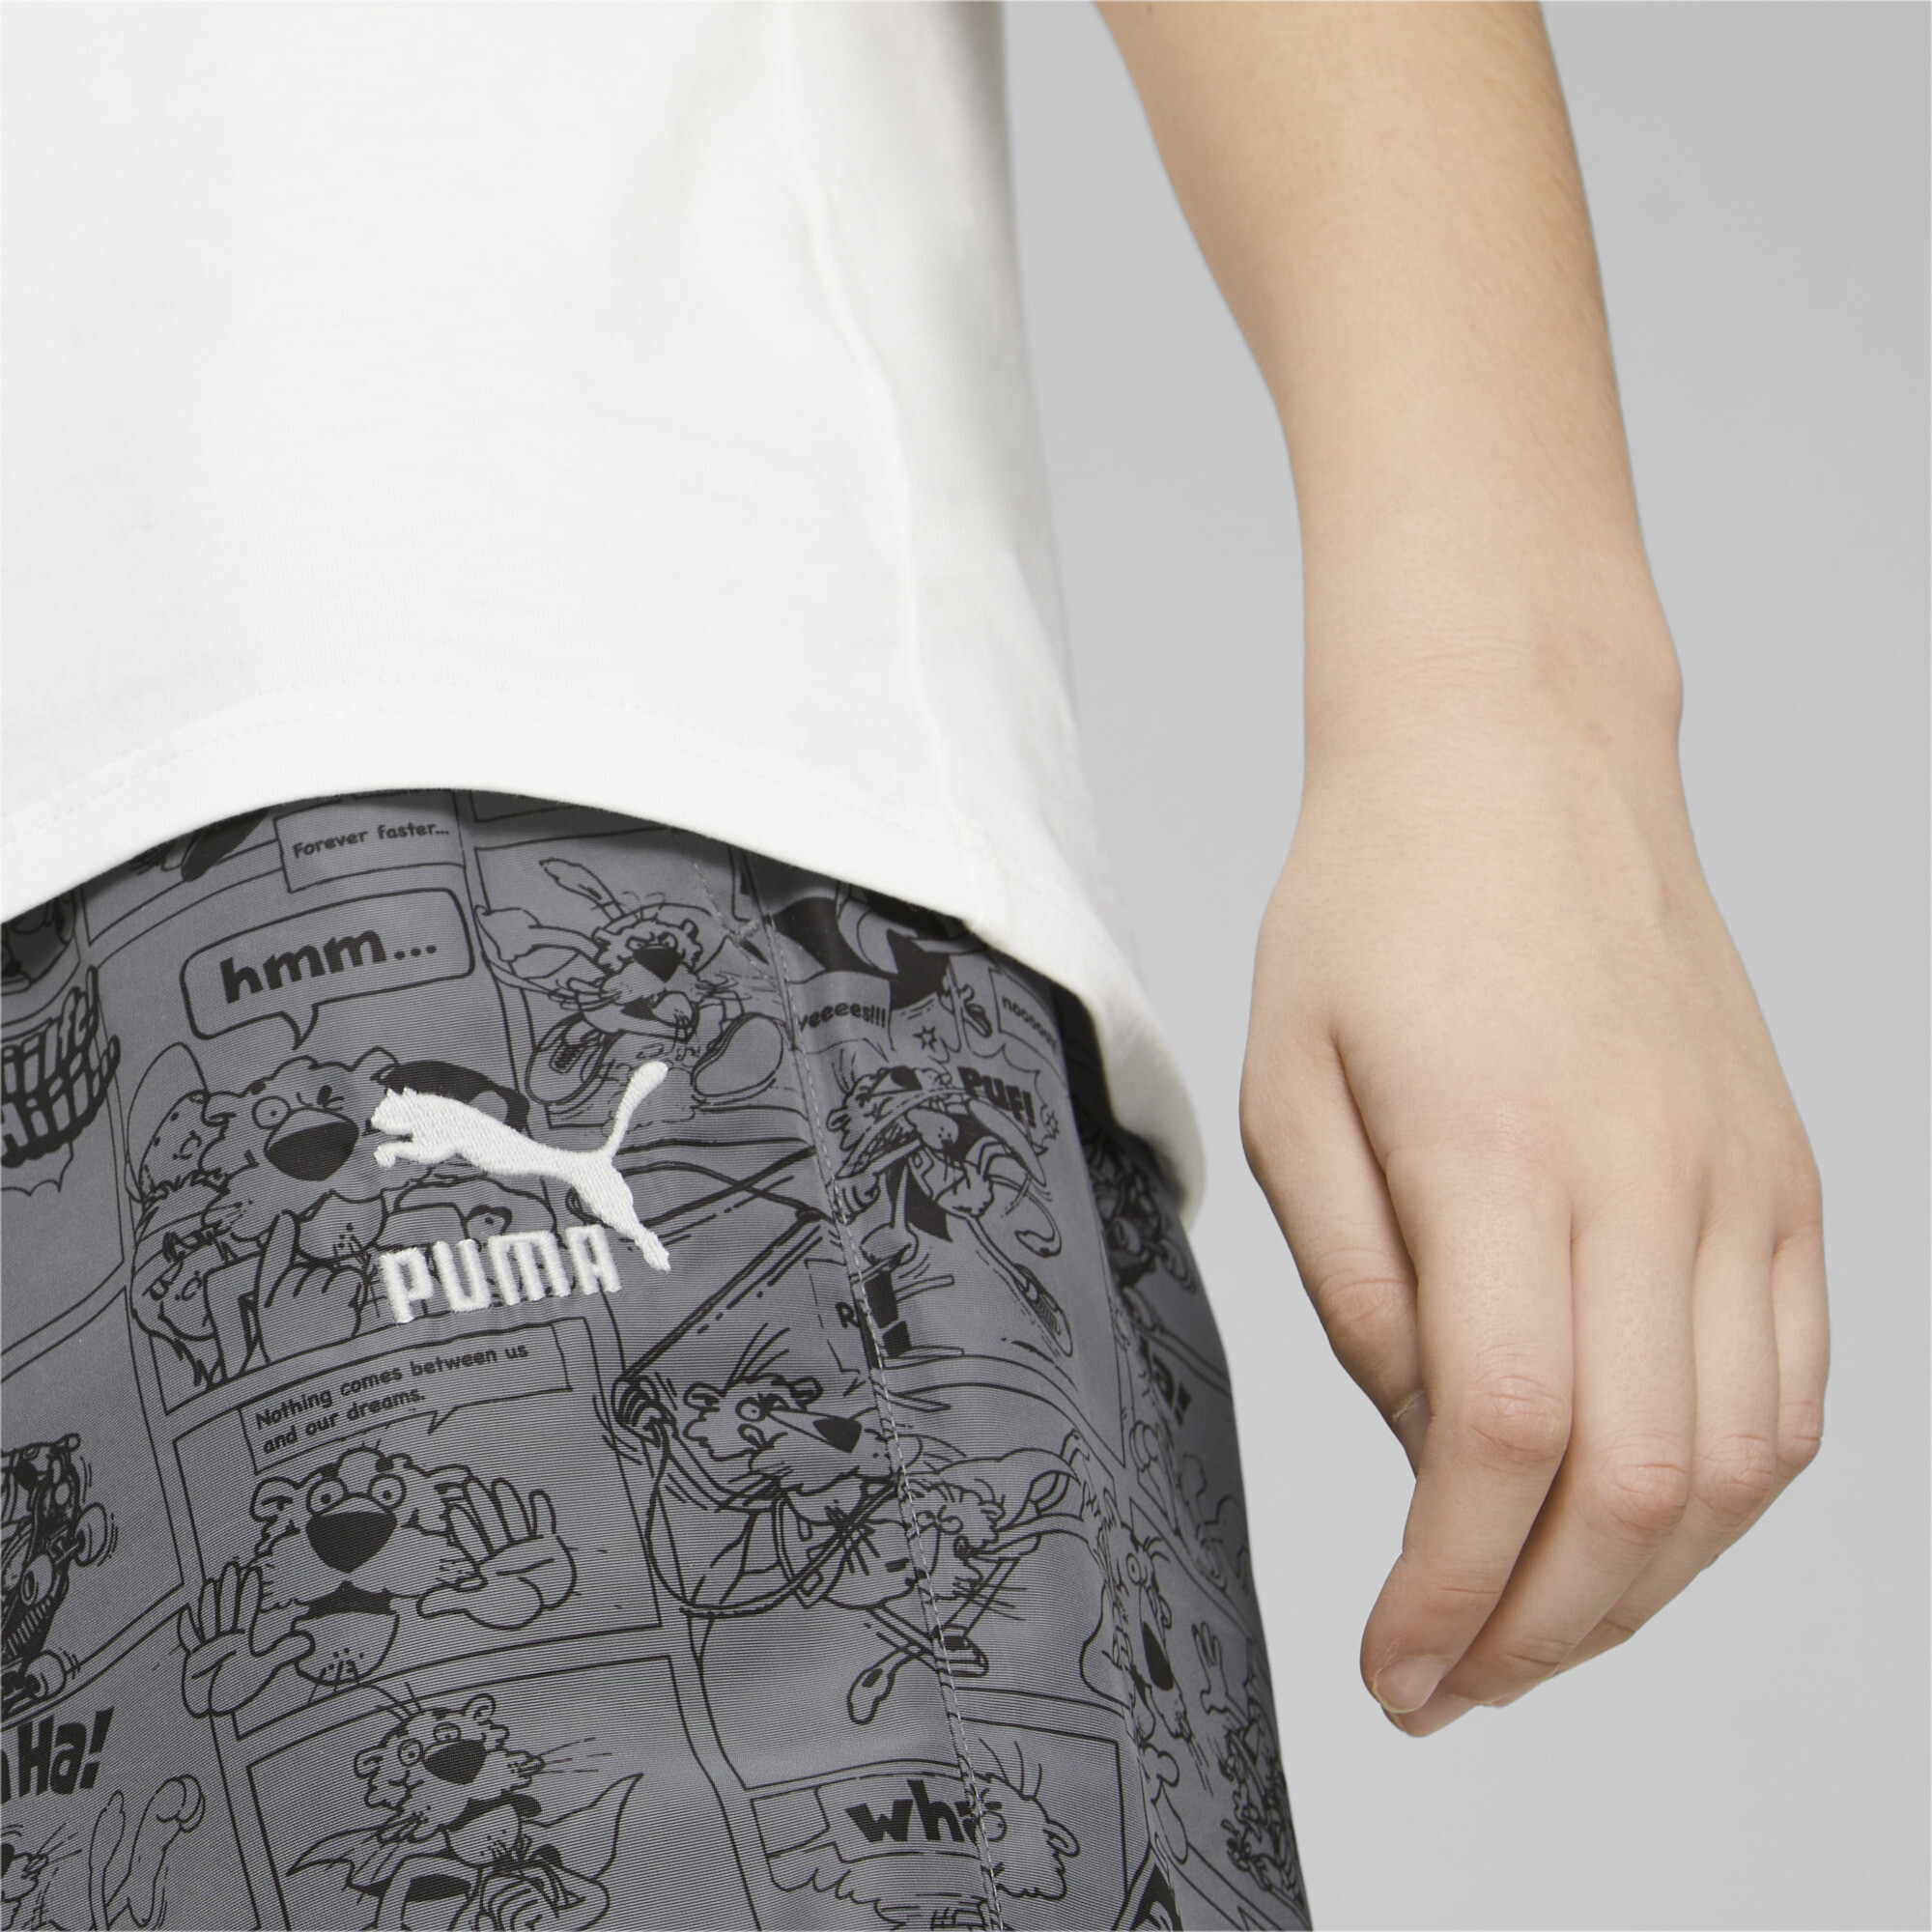 PUMA Classics Super Shorts In Black, Size 11-12 Youth